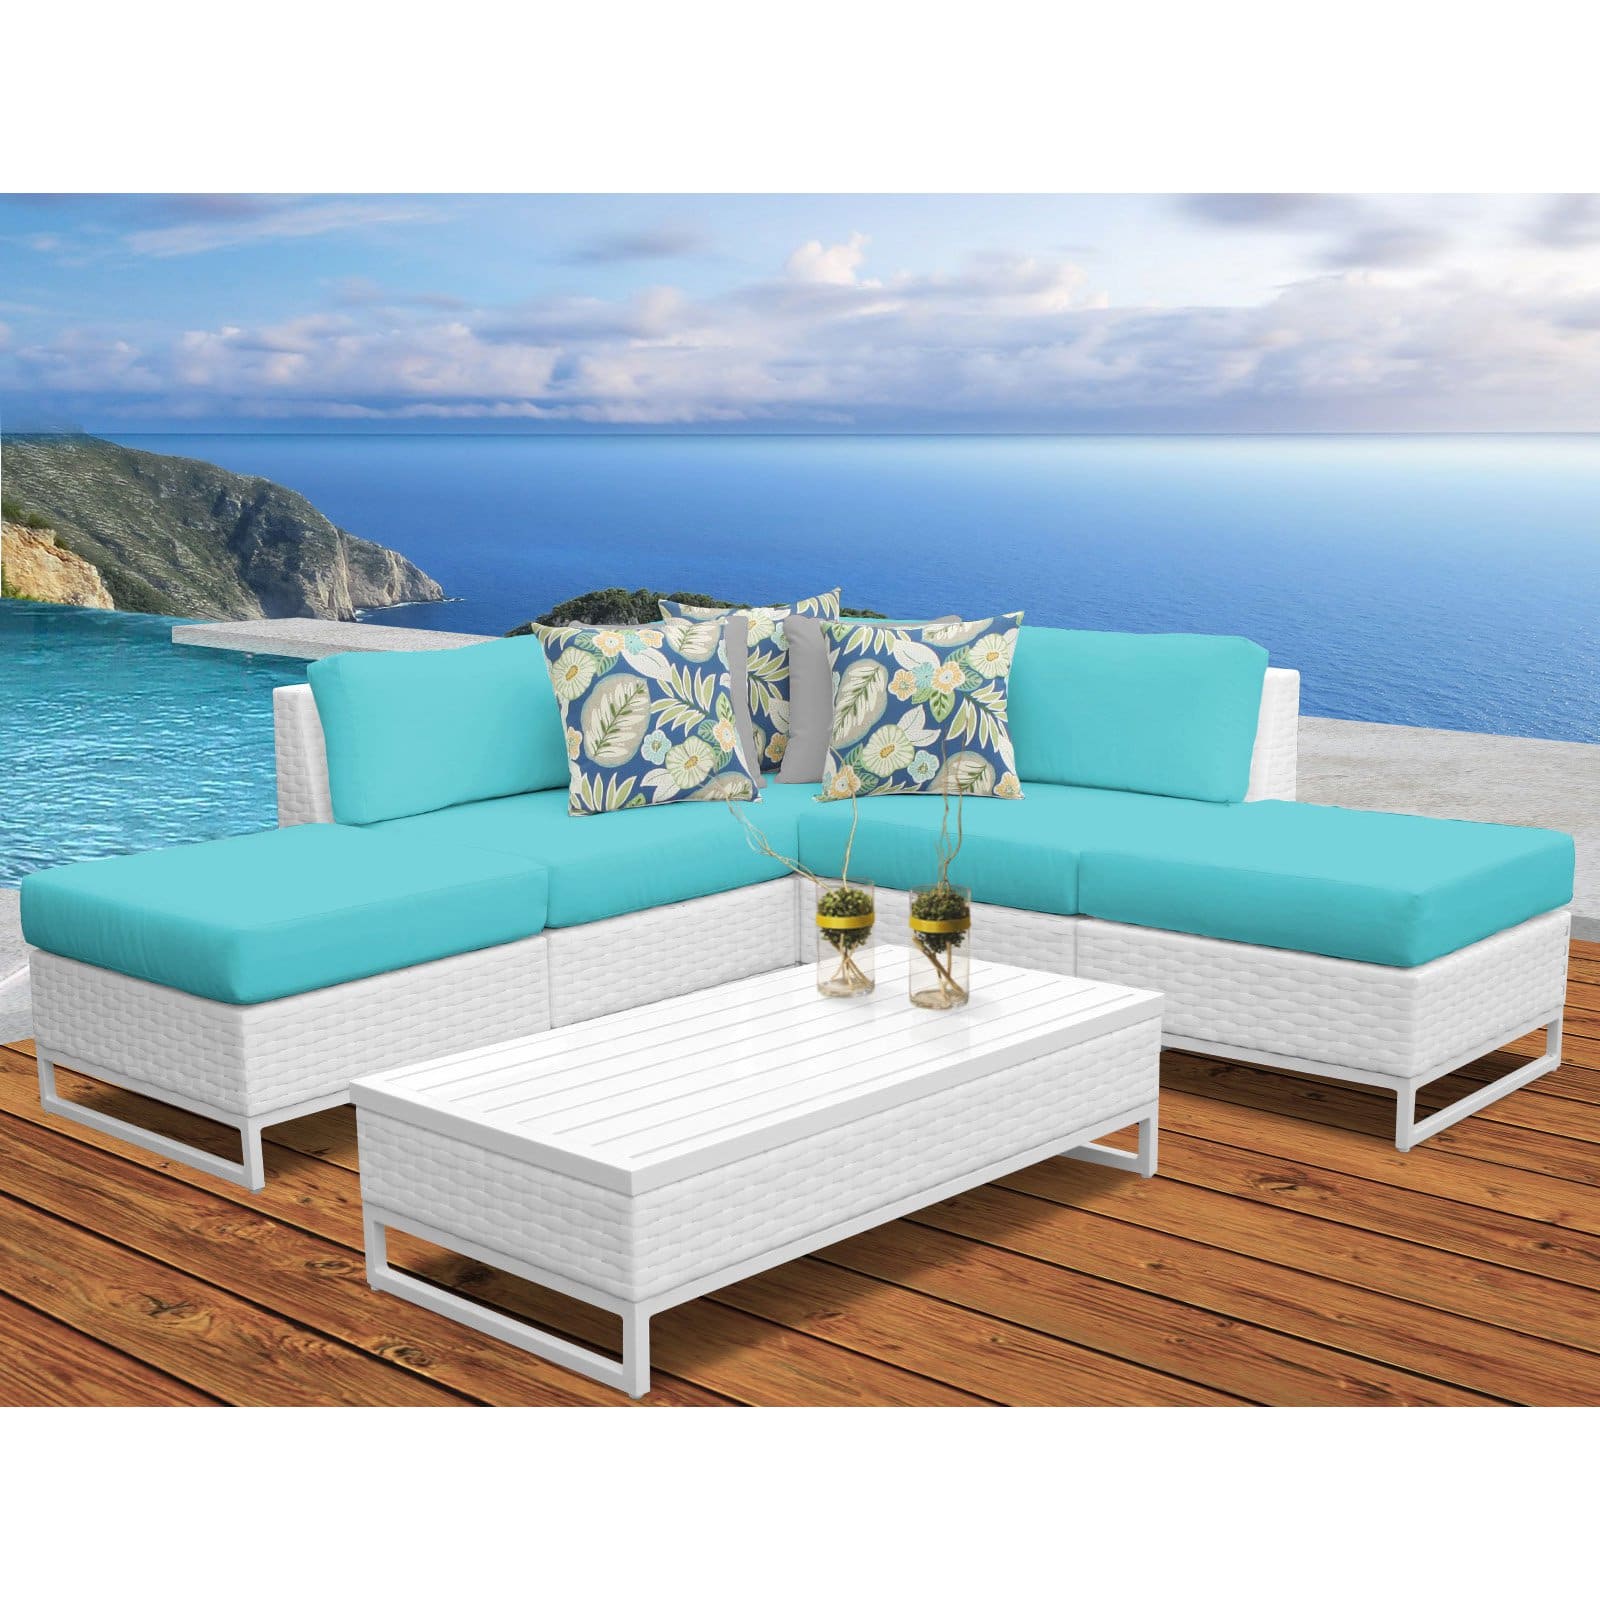 TK Classics Miami 6 Piece Outdoor Wicker Patio Furniture Set 06c - image 2 of 3